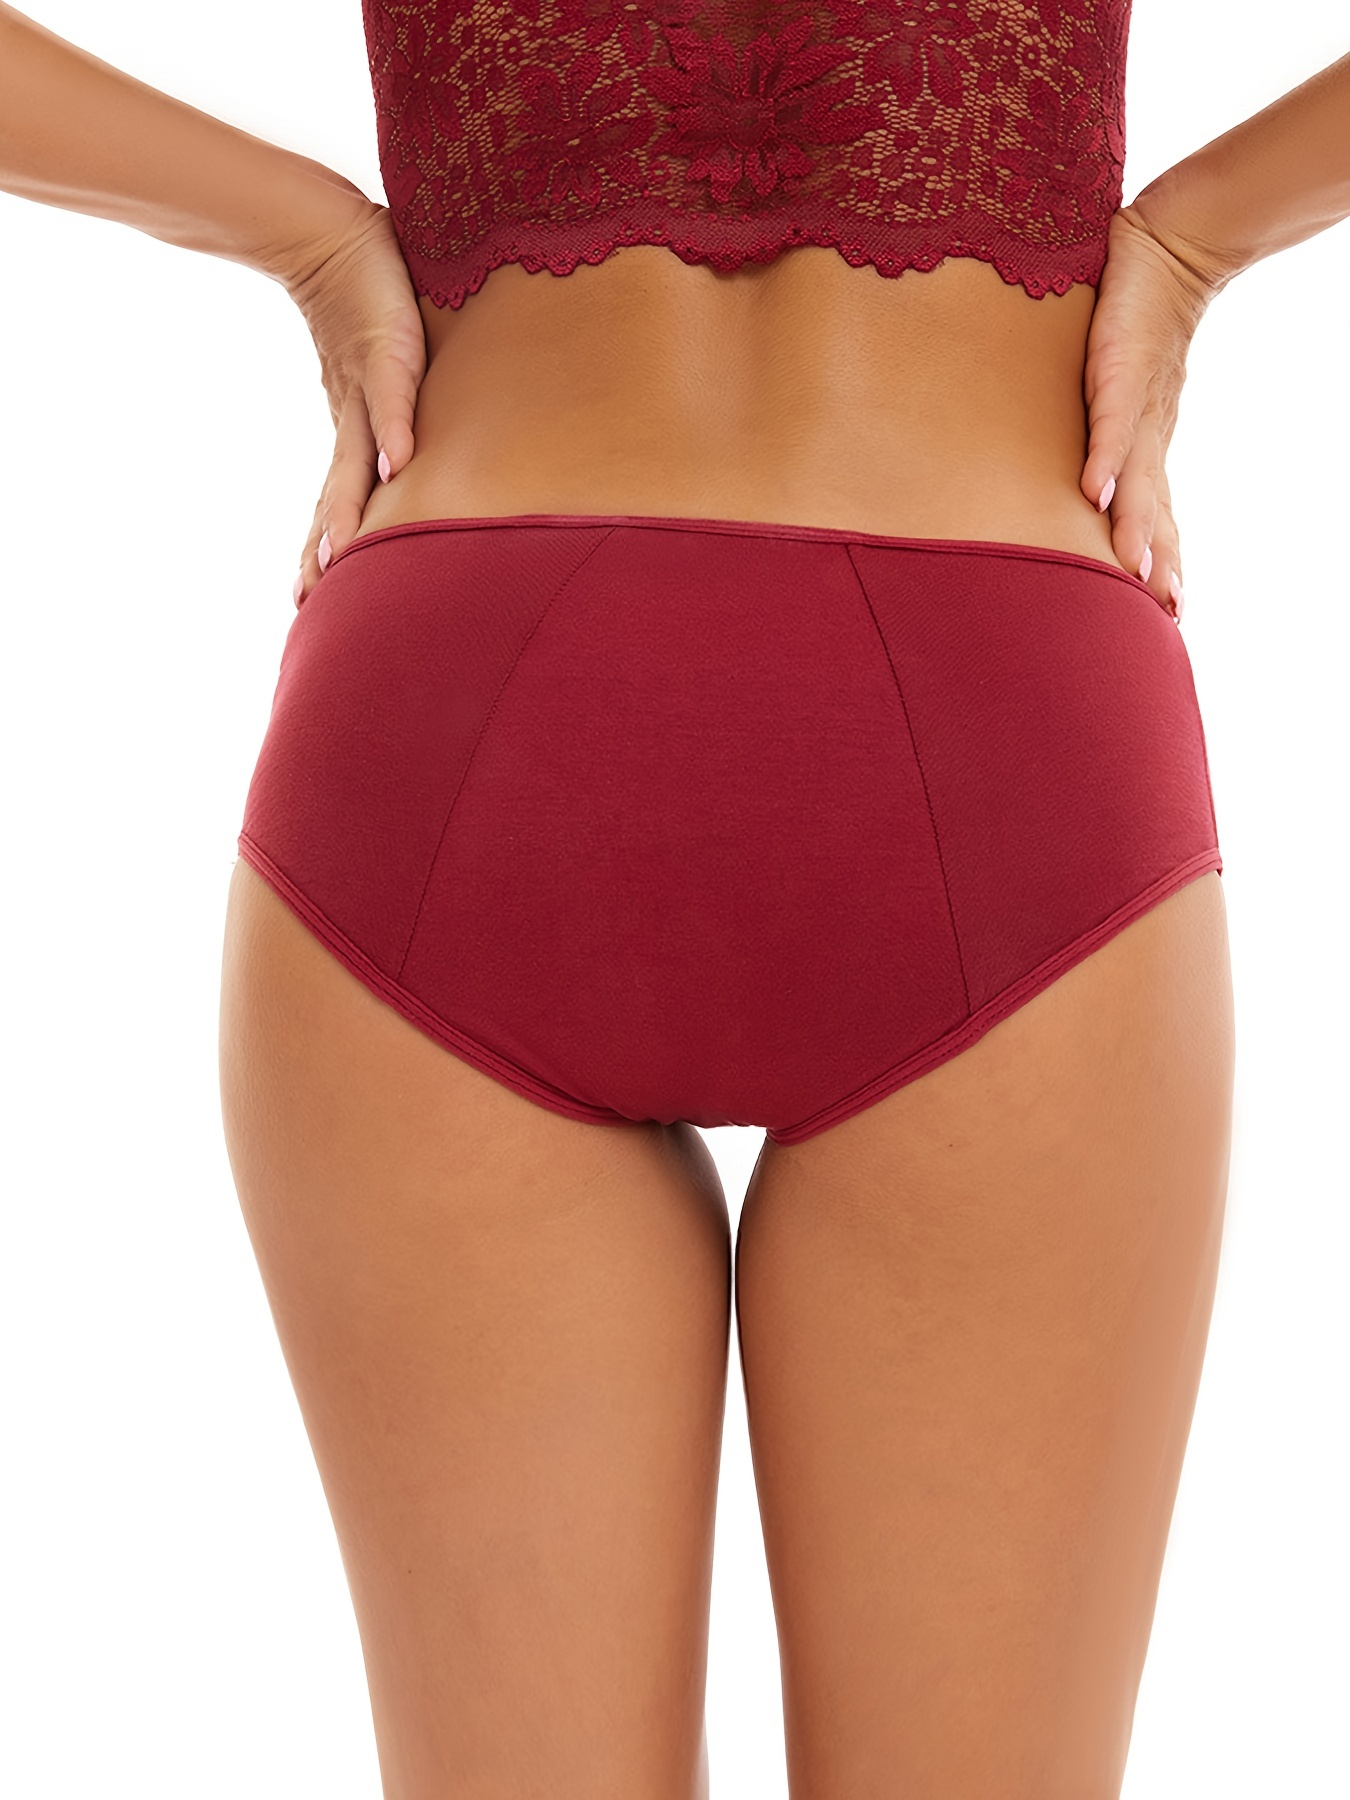 Qcmgmg Panties for Women Bikini Leak Proof Solid Menstrual Period Low Rise  Woman's Underwear Watermelon Red L 